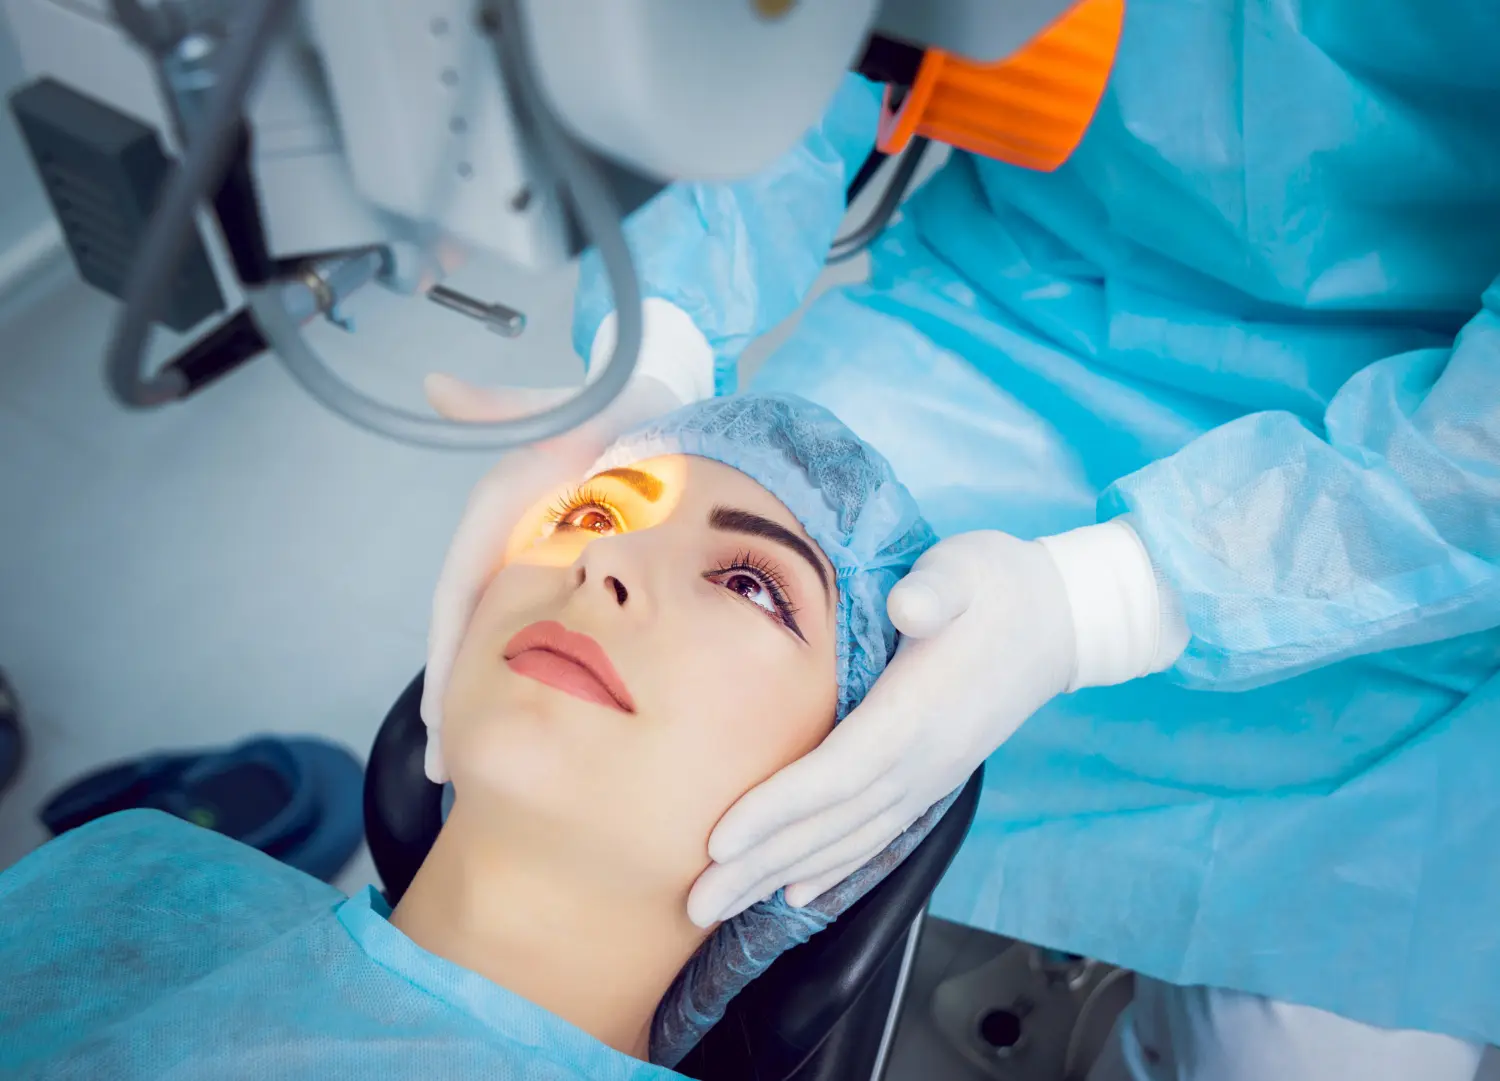 Patient undergoing an eye procedure with focused illumination on the eye